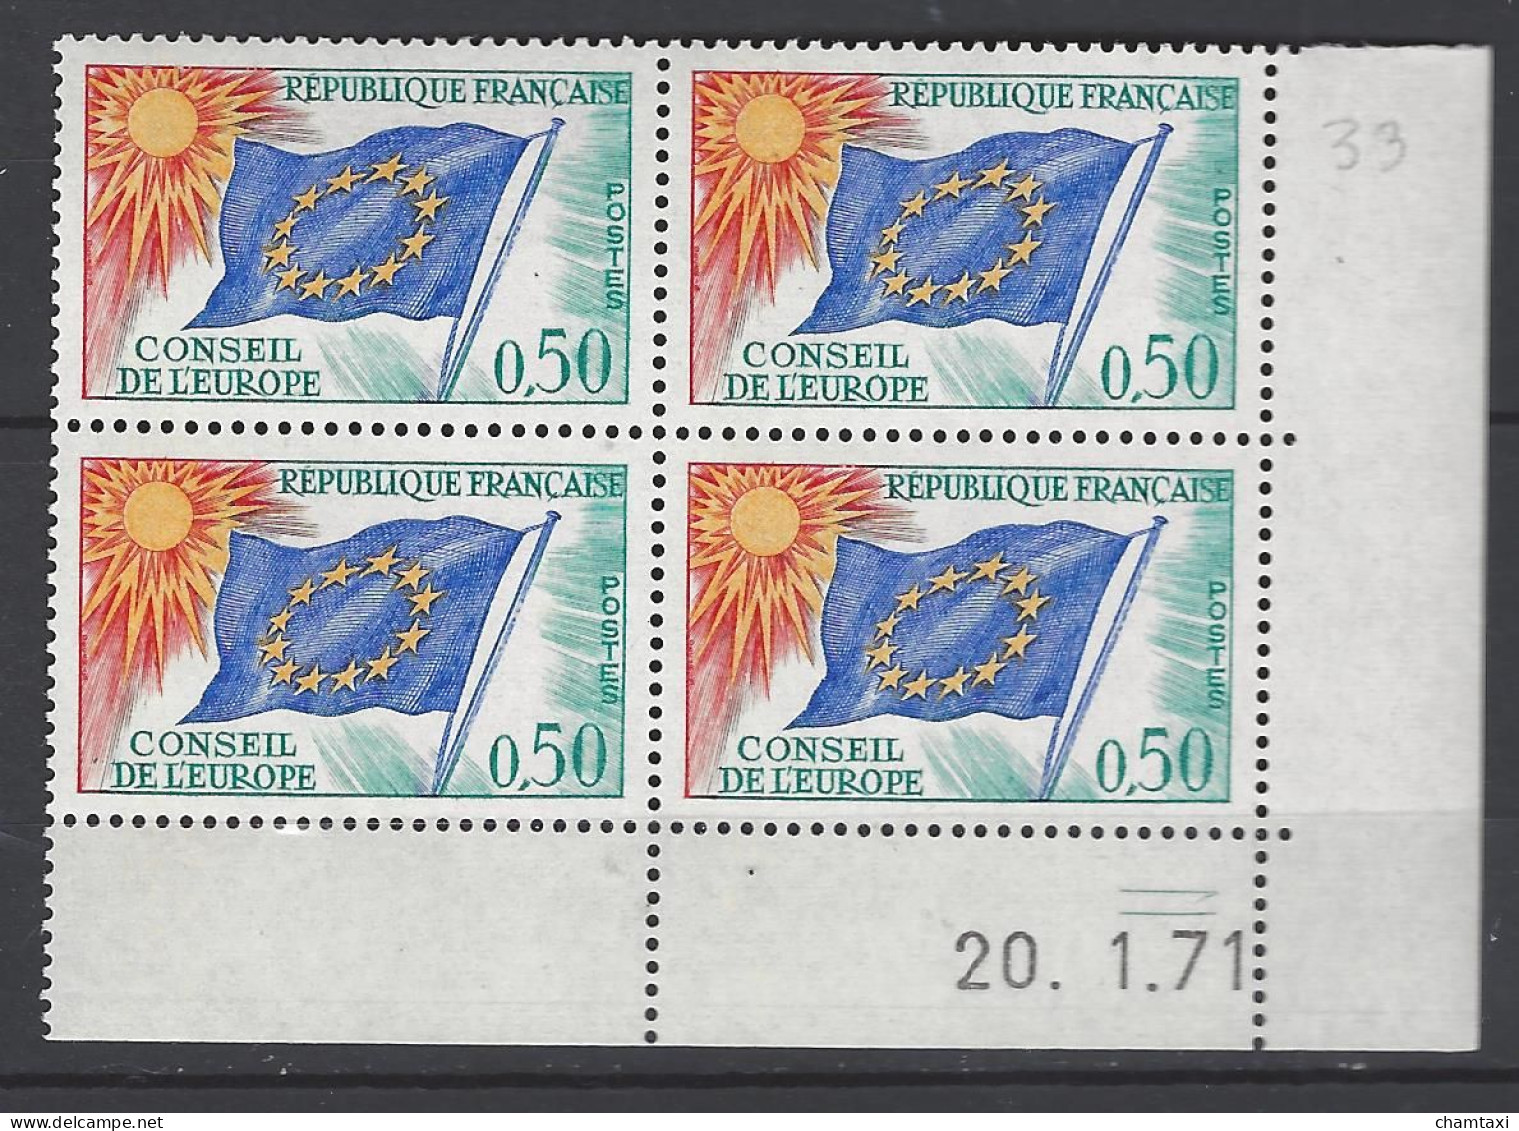 CD 33 FRANCE 1971 TIMBRE SERVICE CONSEIL DE L EUROPE DRAPEAU TYPE 1958 1959  COIN DATE 33 : 20 / 1 / 71 - Servizio